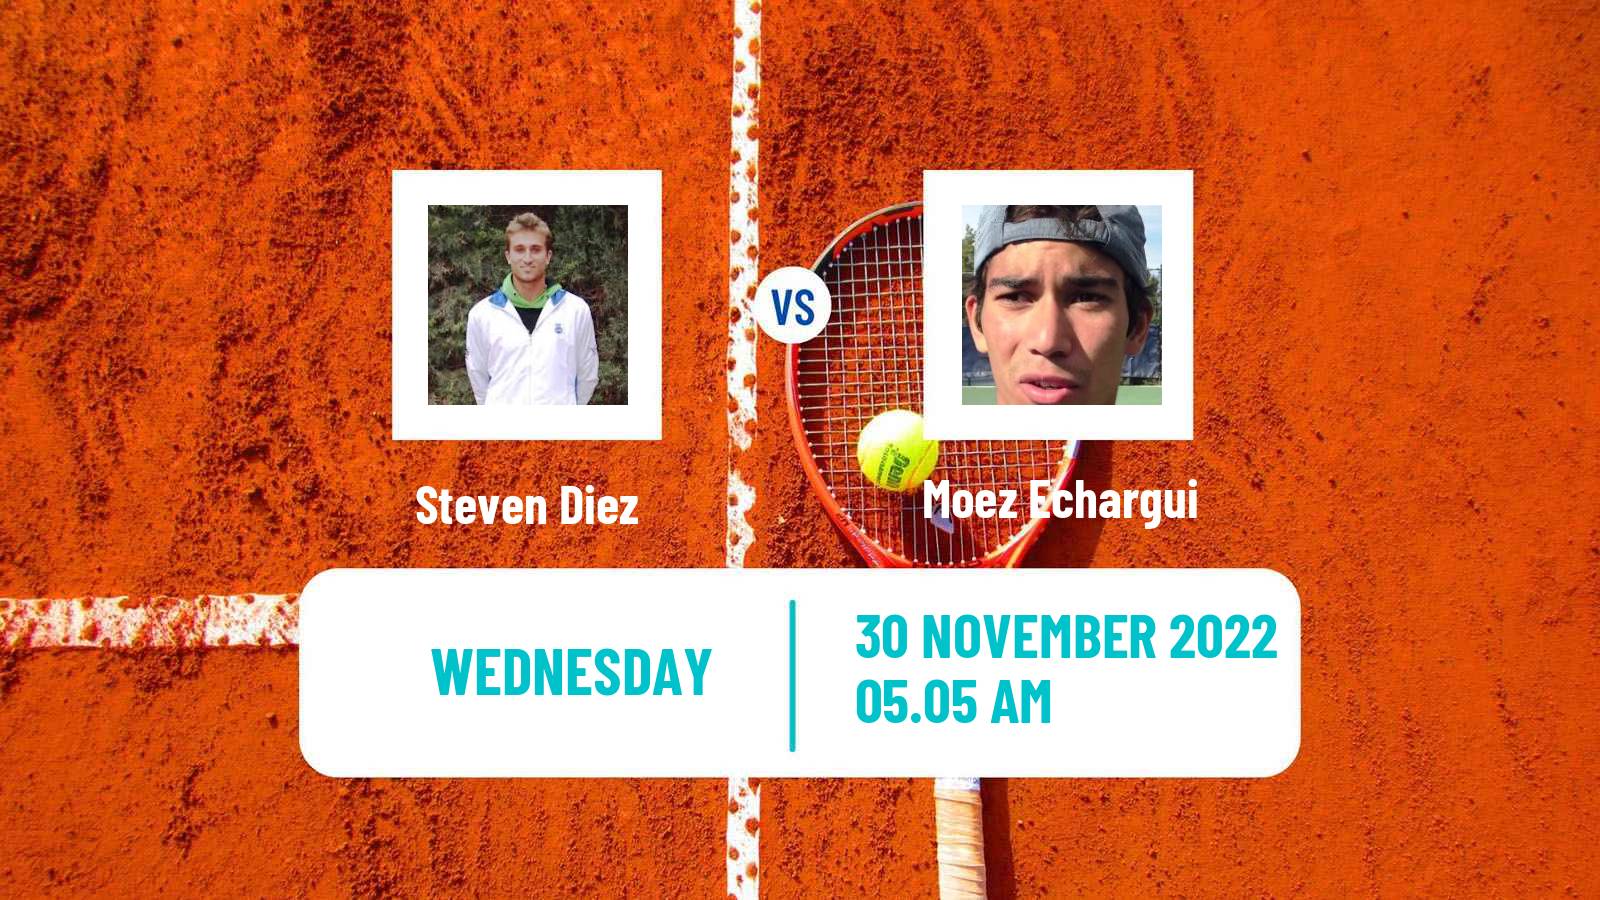 Tennis ATP Challenger Steven Diez - Moez Echargui